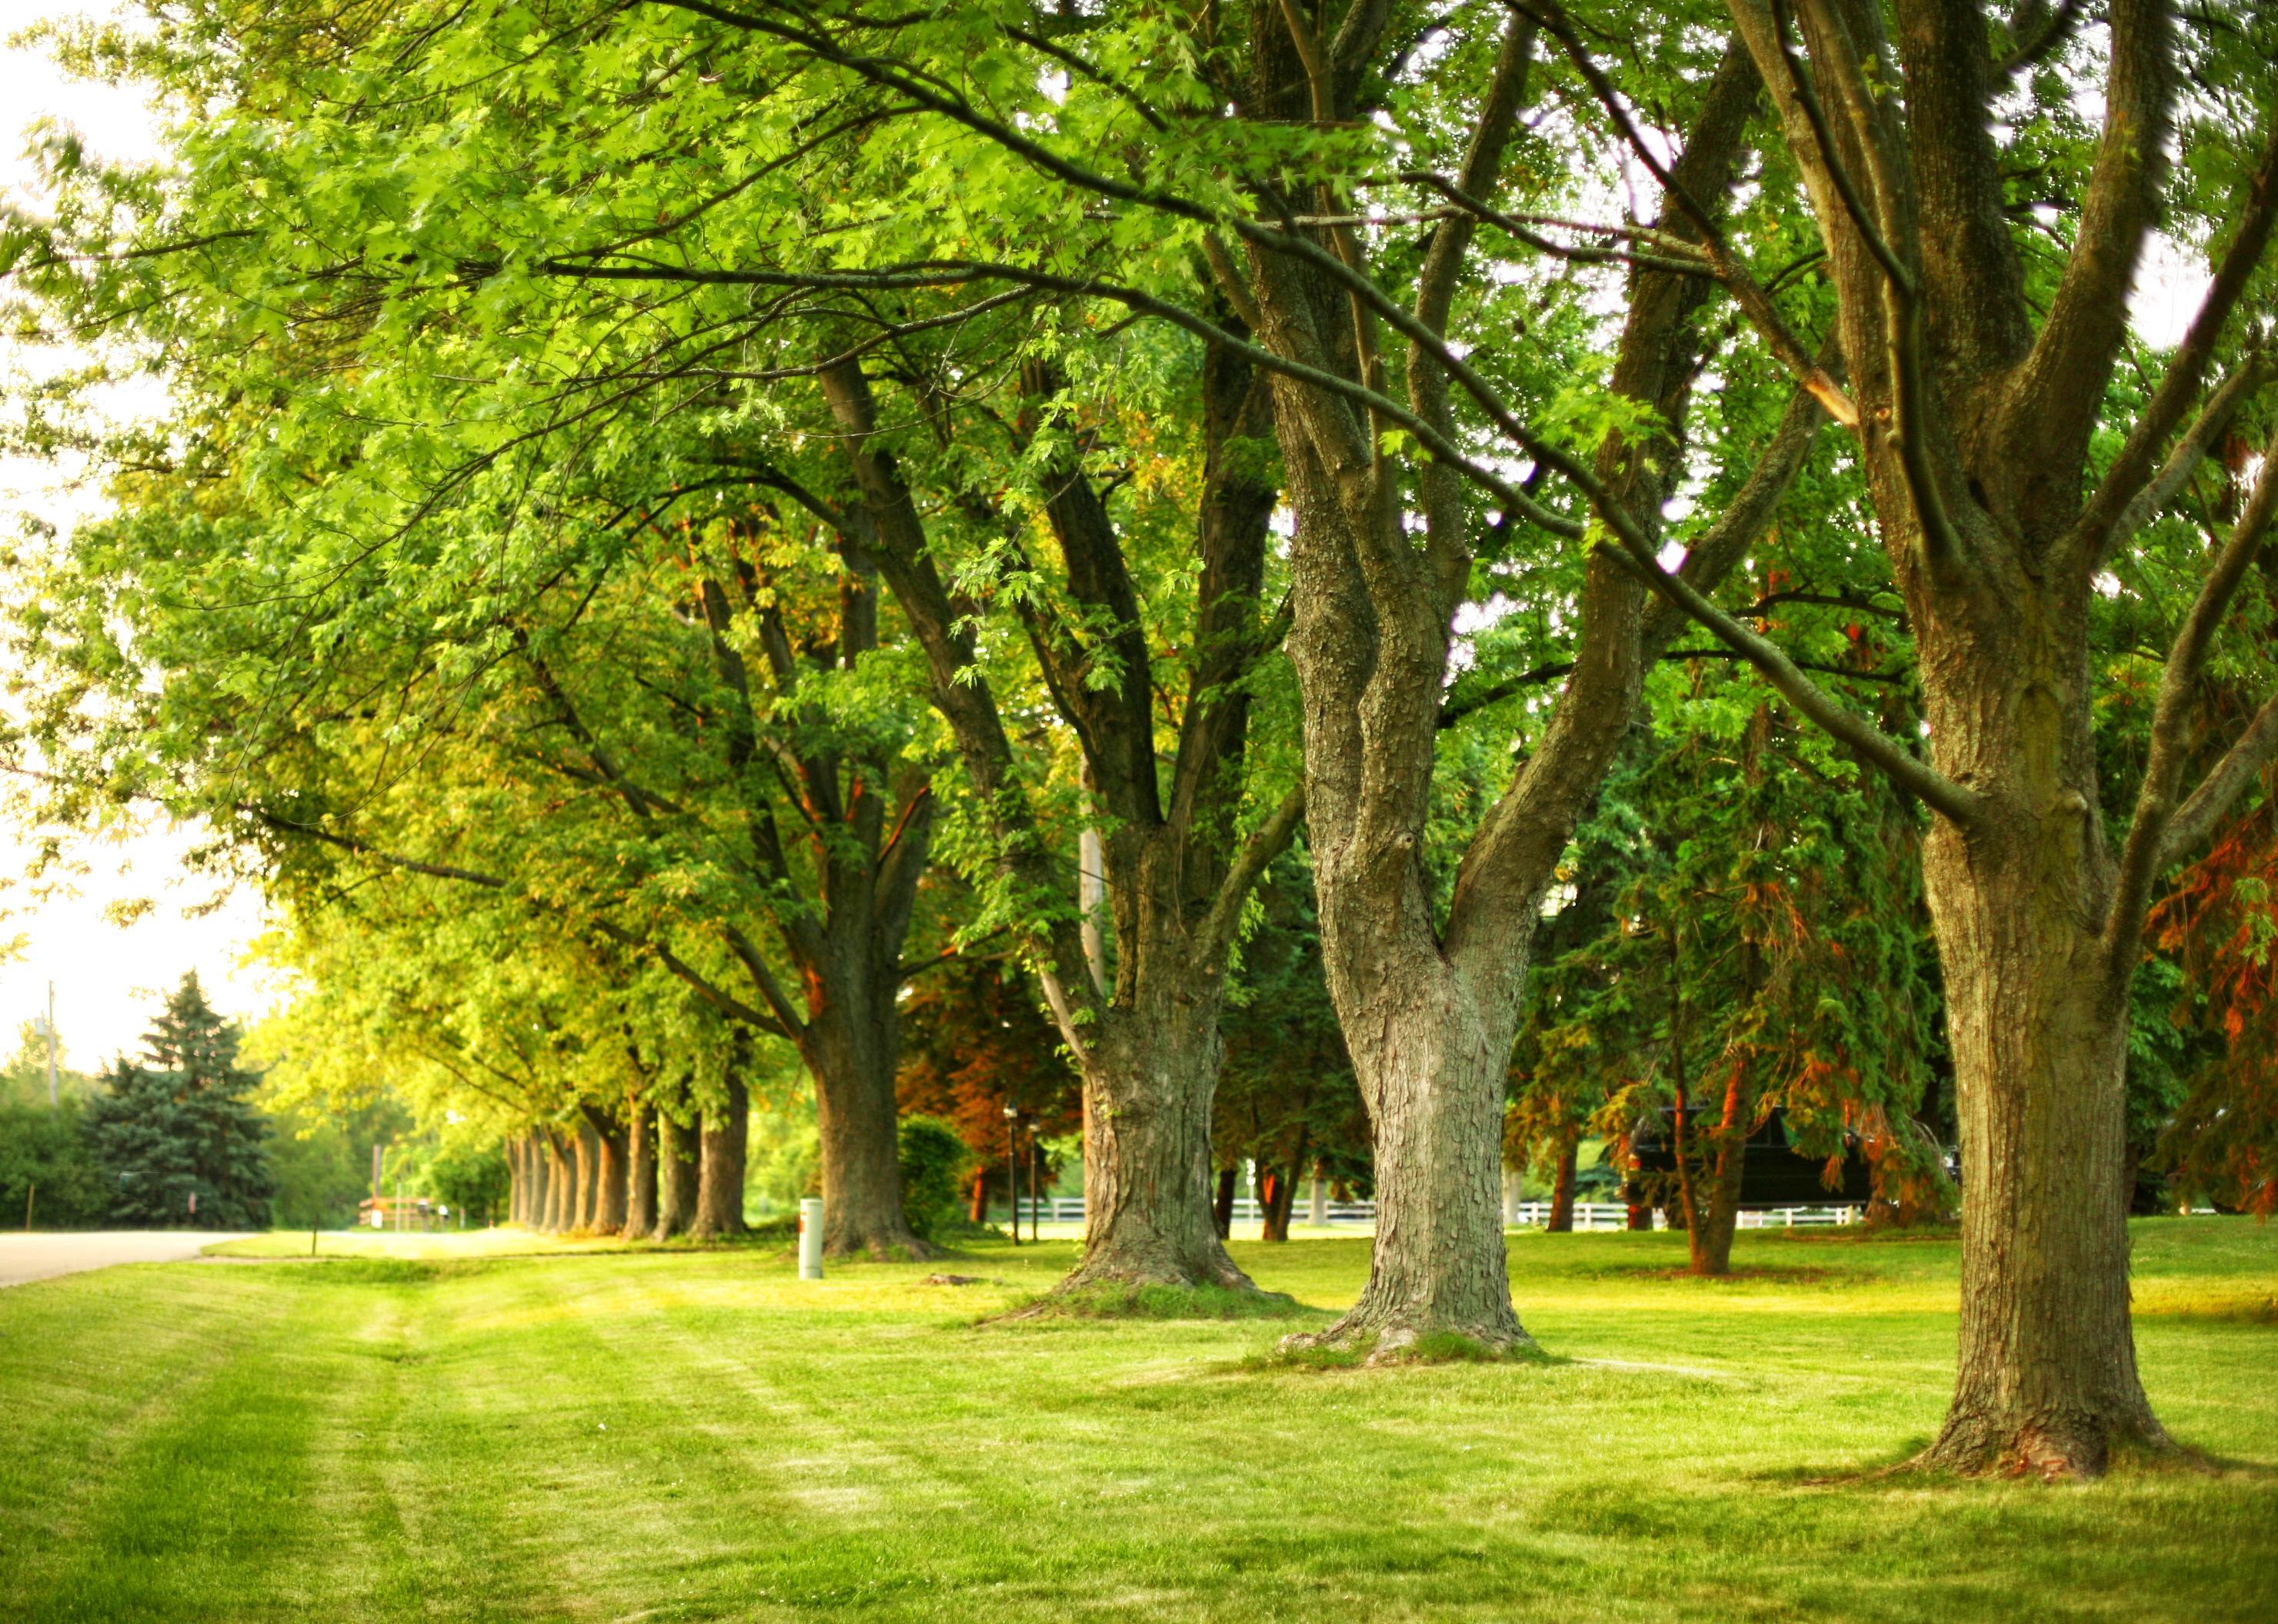 Park with giant oak trees in a suburban neighborhood.